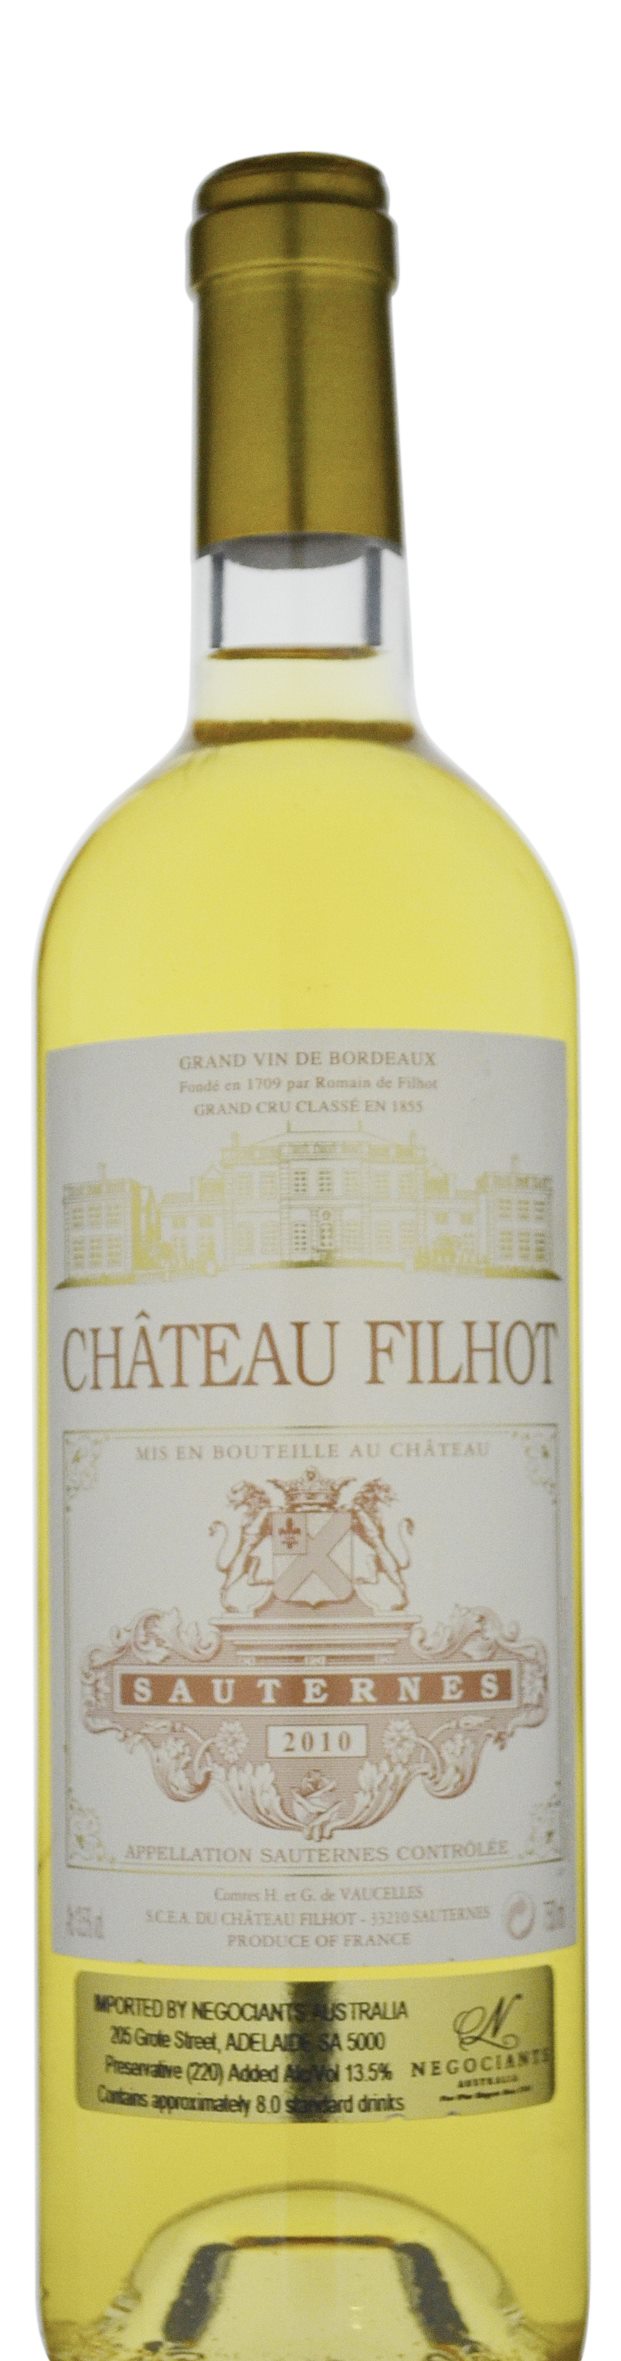 Chateau Filhot Sauternes 2010